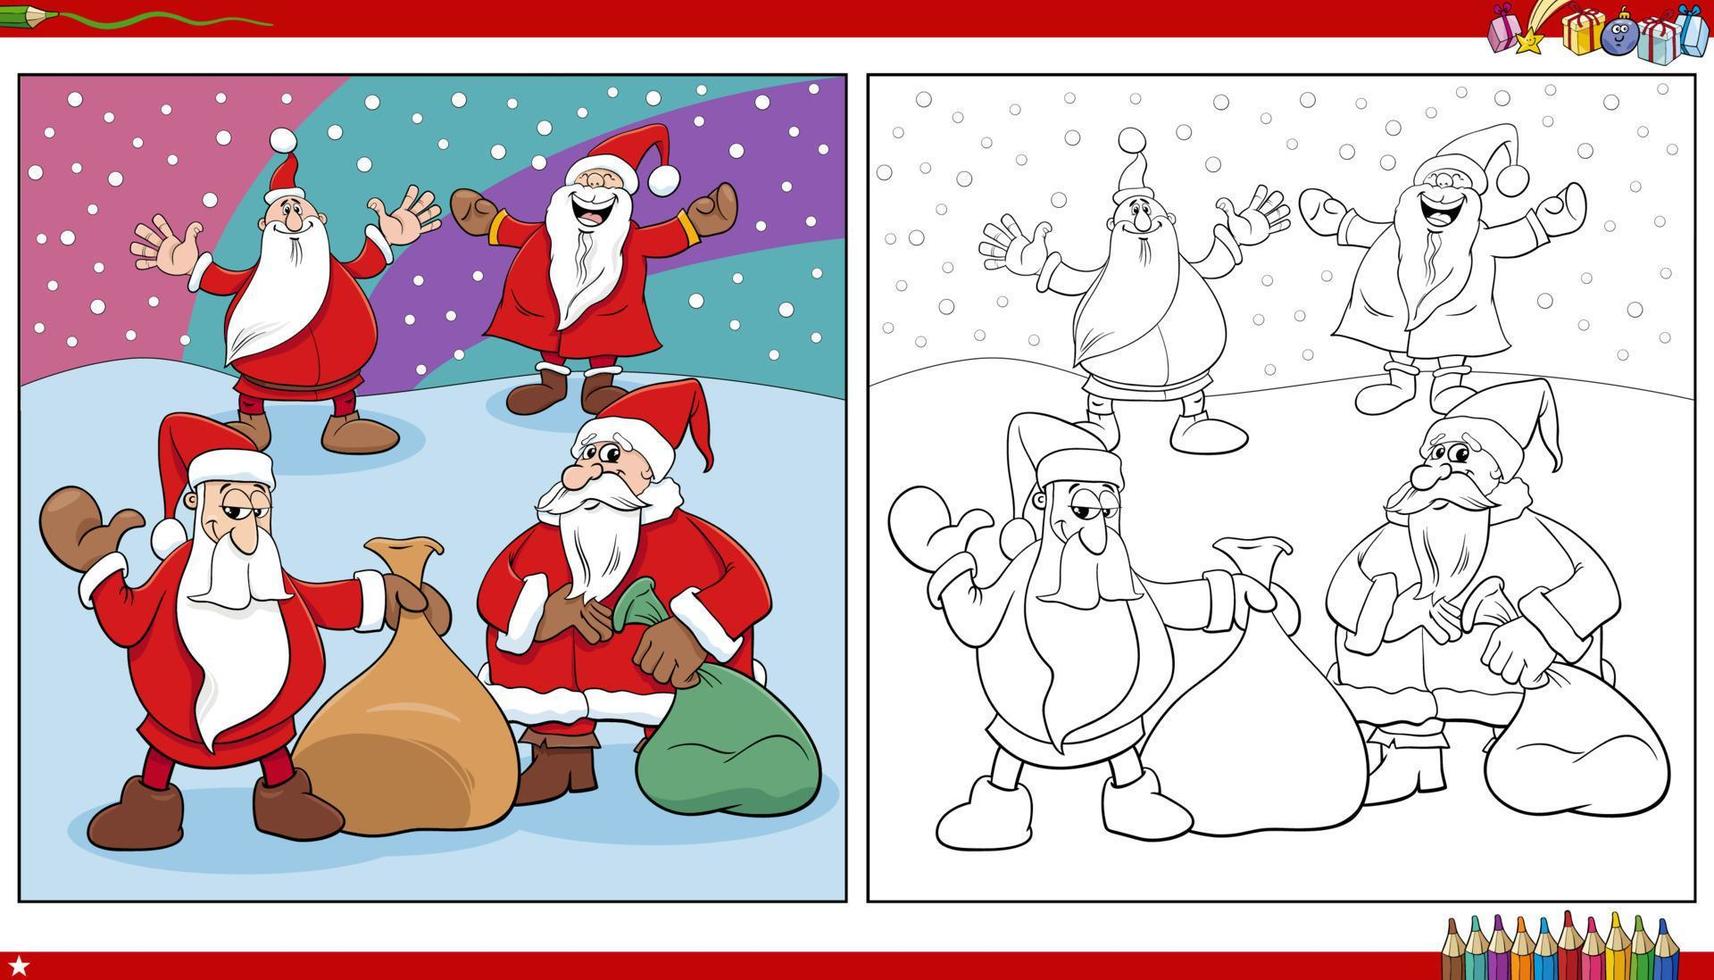 Santa Claus Christmas characters group coloring page vector